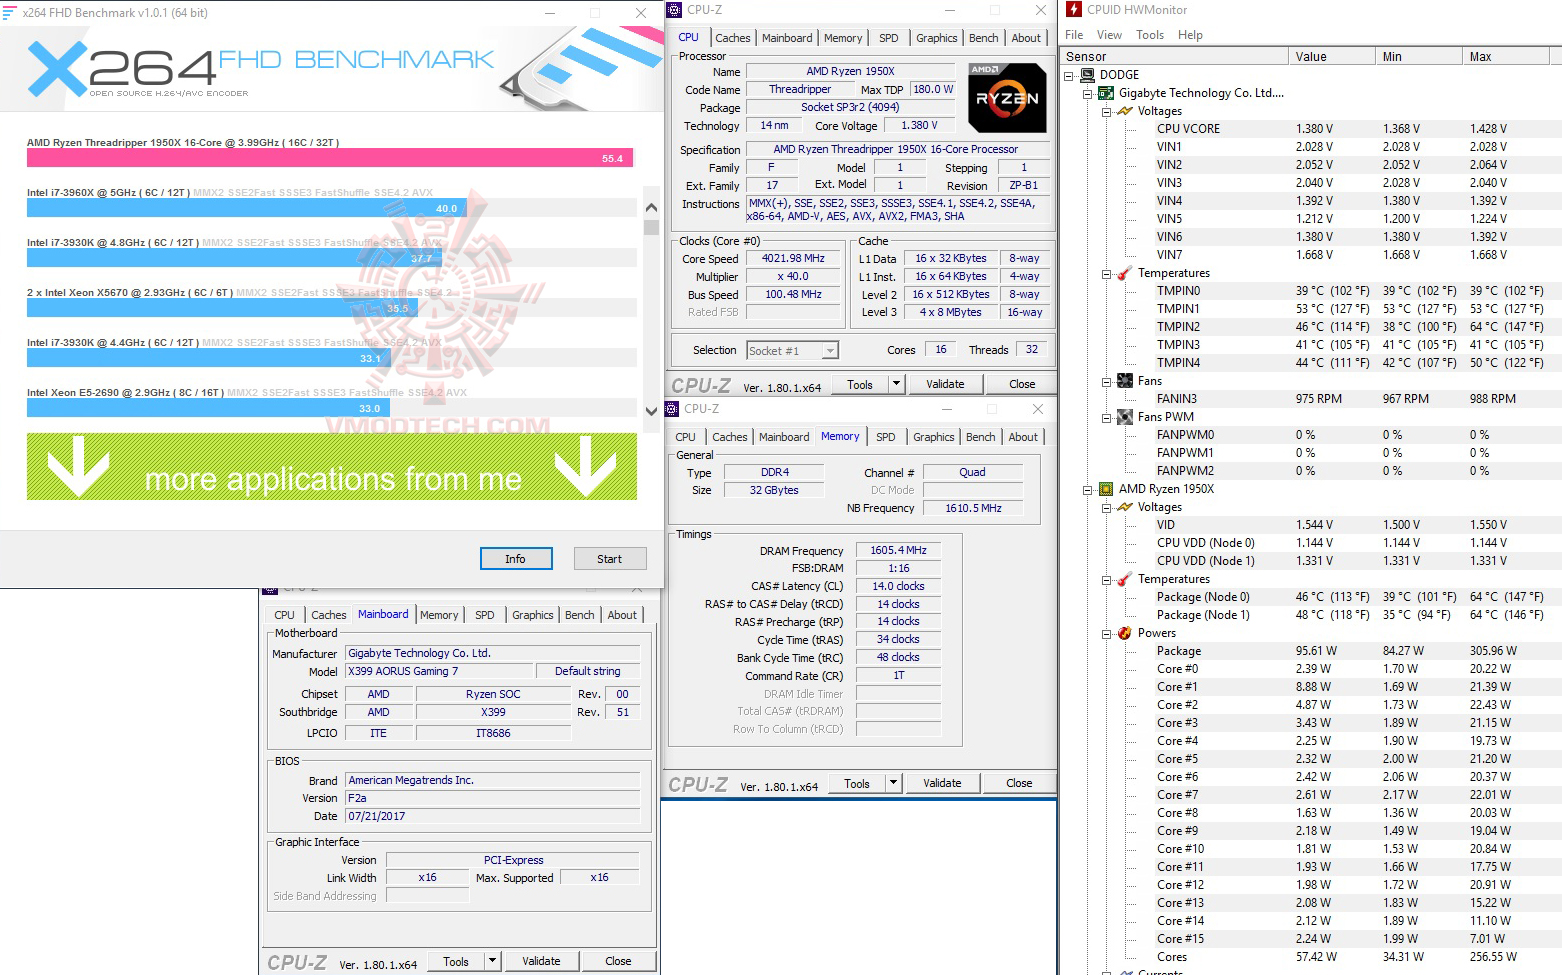 x264 G.SKILL Trident Z RGB DDR4 3200MHz 32GB (8GBx4) Quad Channel Review